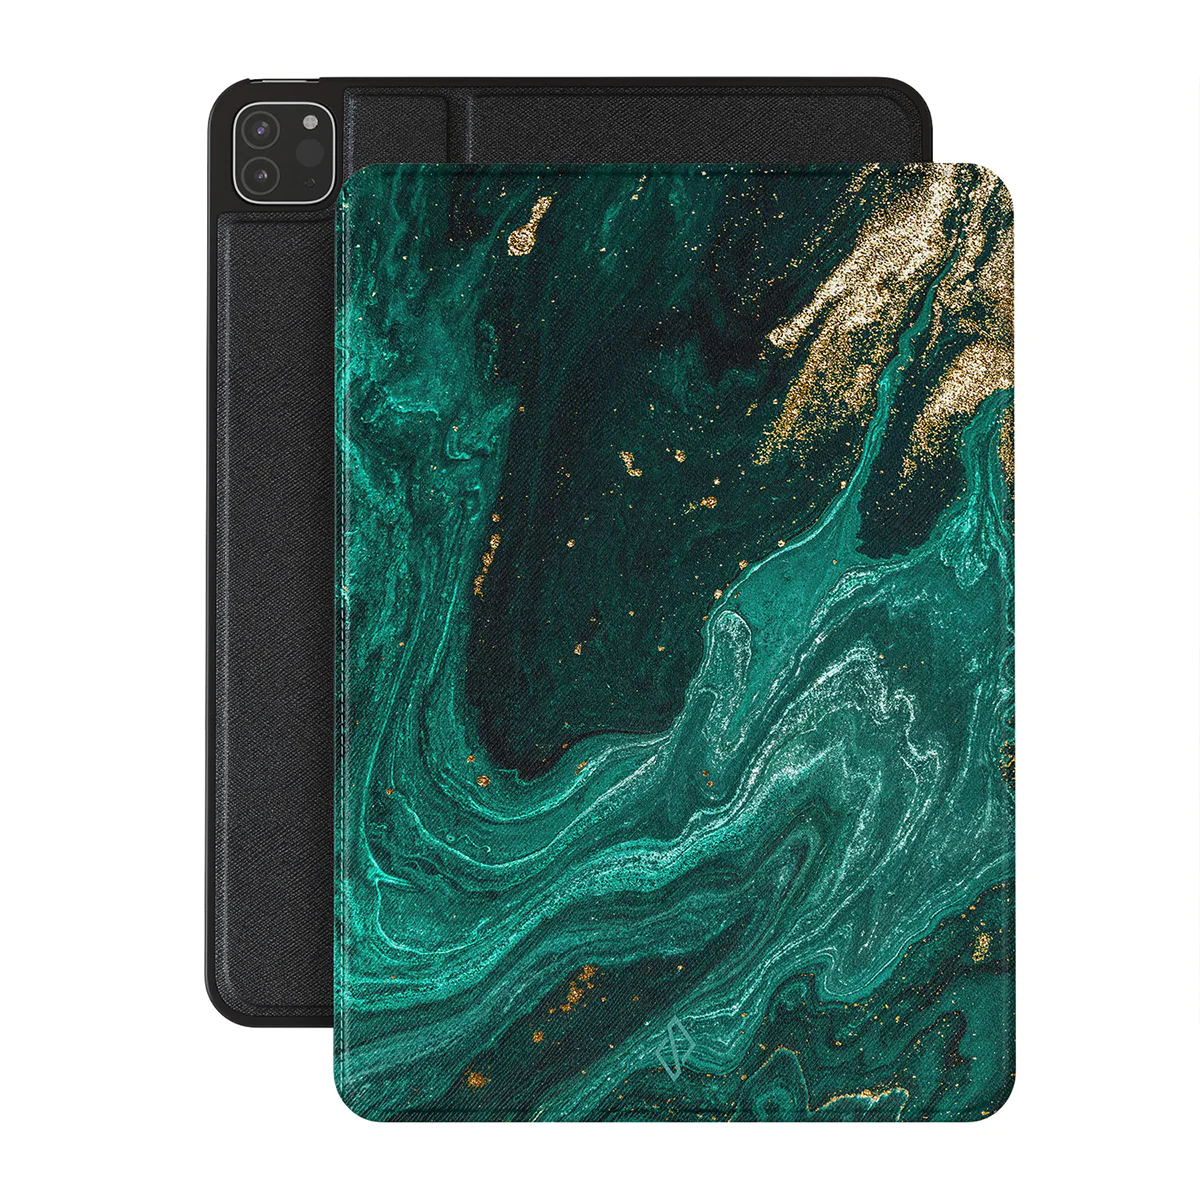 BURGA Emerald Pool Case for iPad